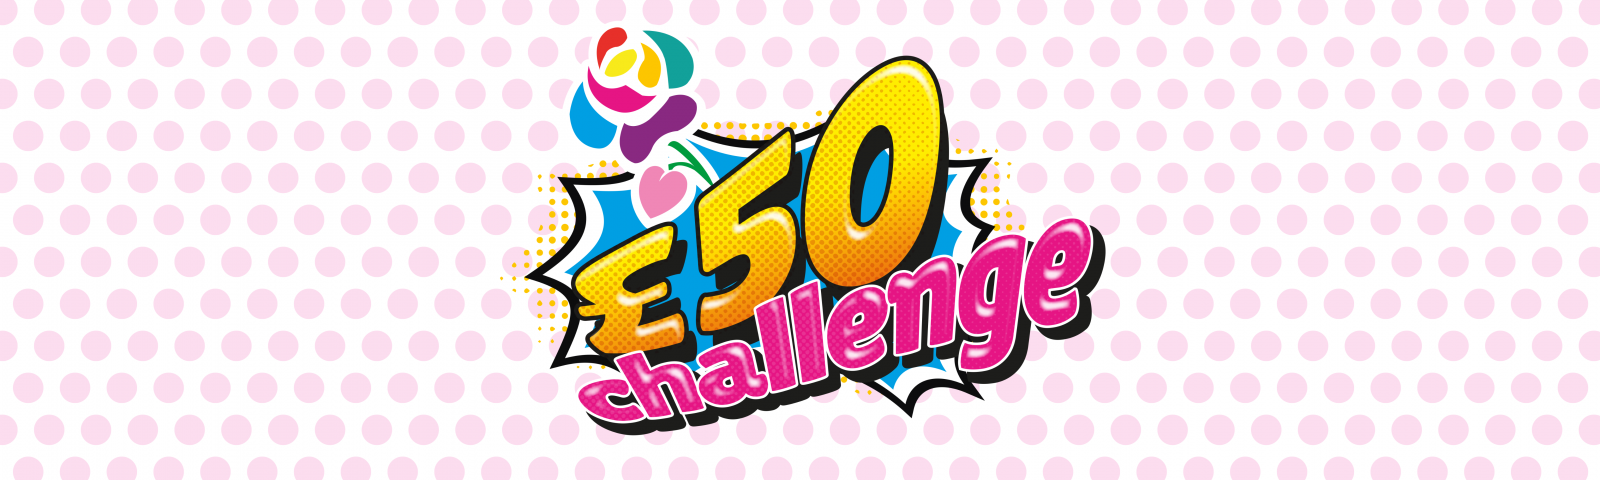 £50 challenge web banner